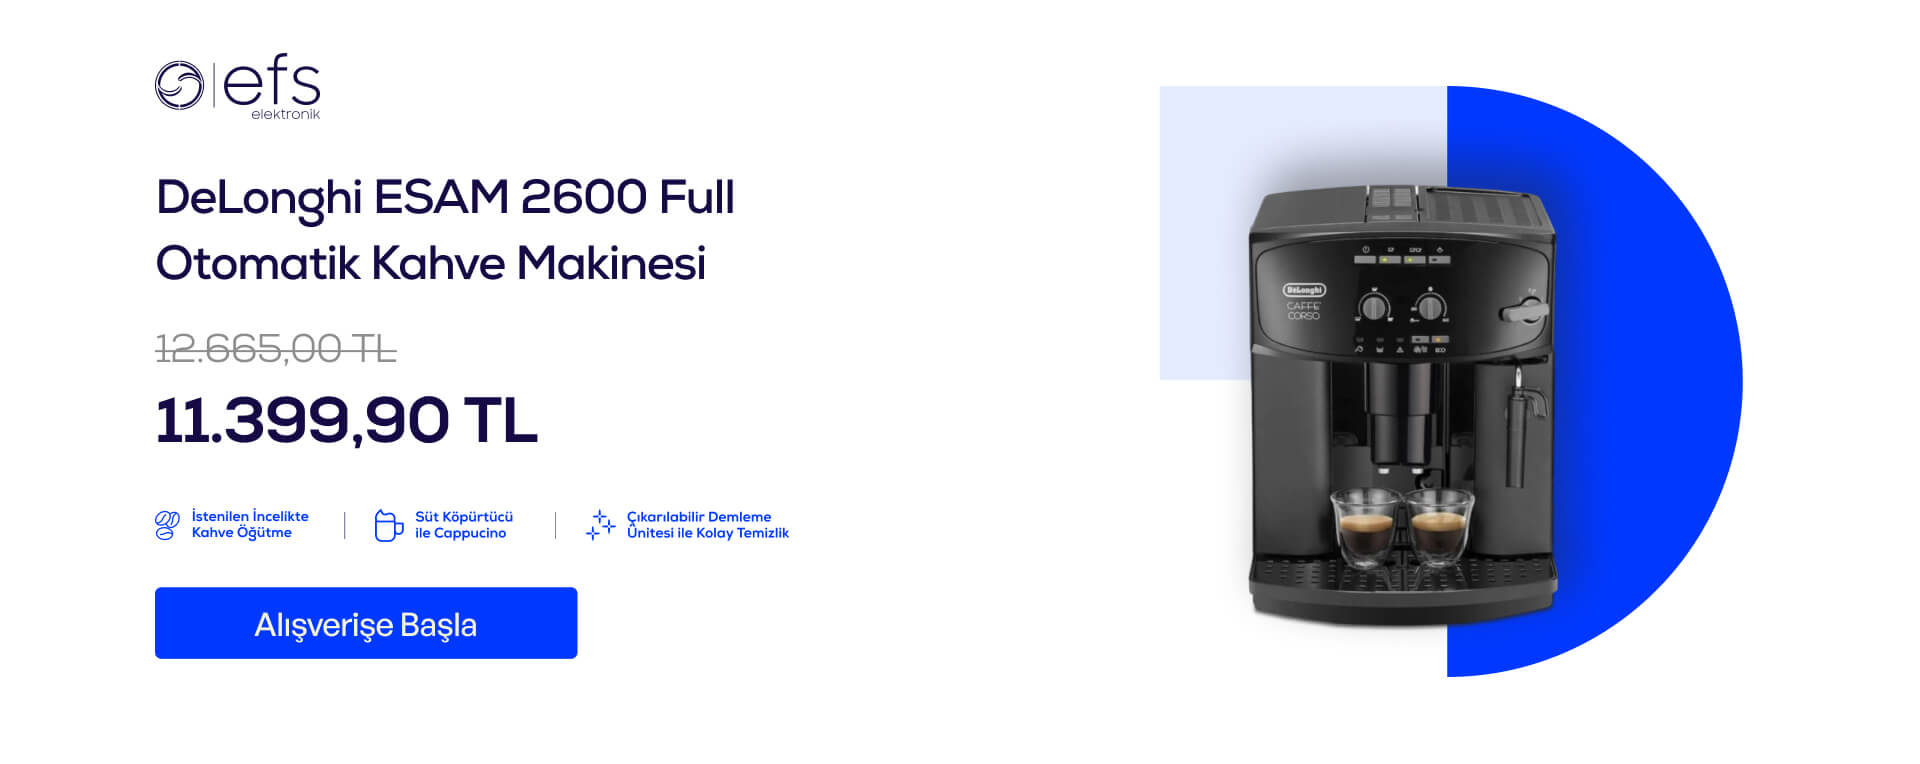 DeLonghi ESAM 2600 Full Otomatik Kahve Makinesi